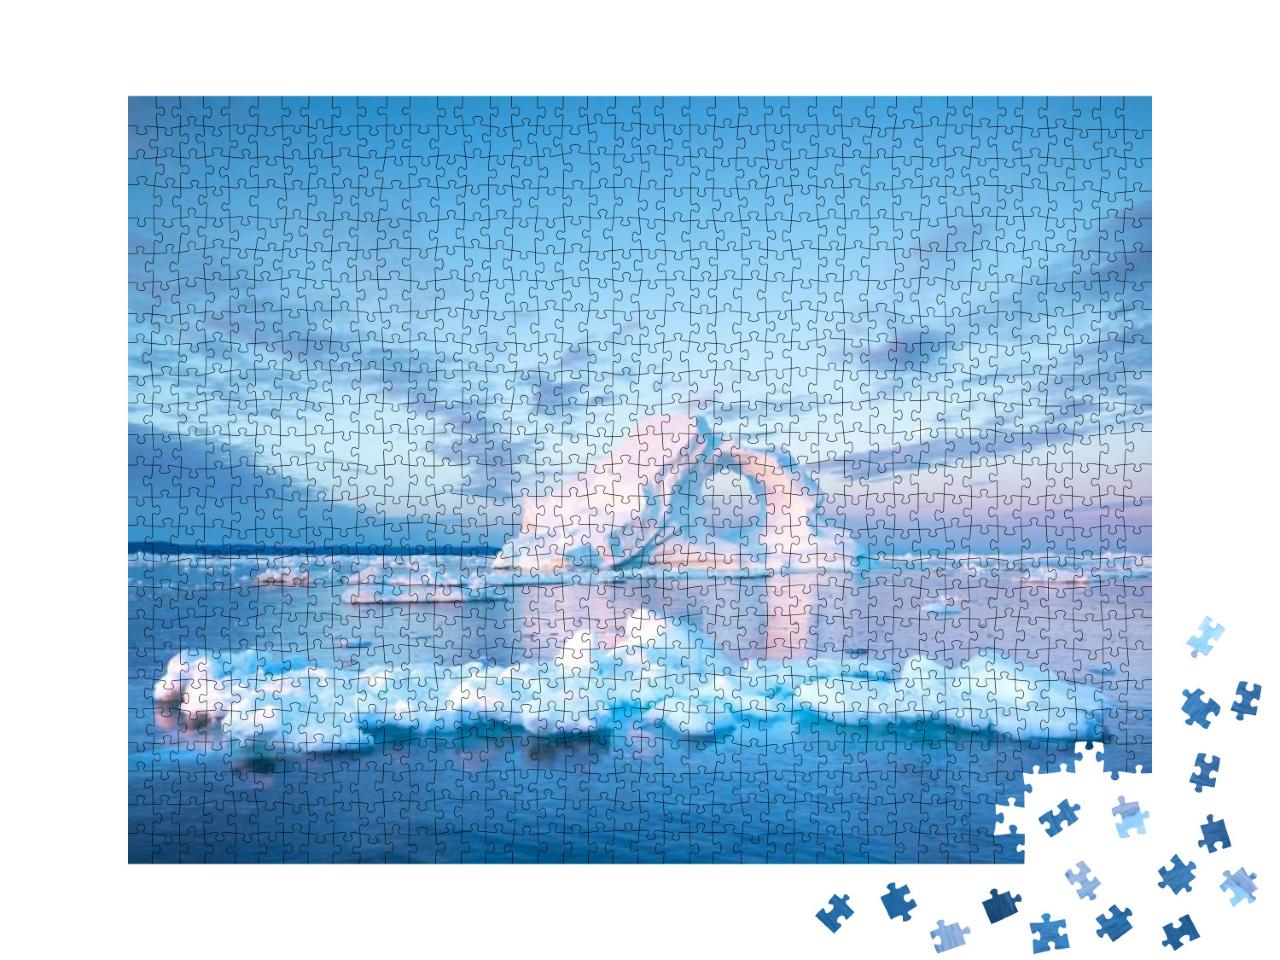 Puzzle 1000 Teile „Eisberg im Sonnenaufgang“